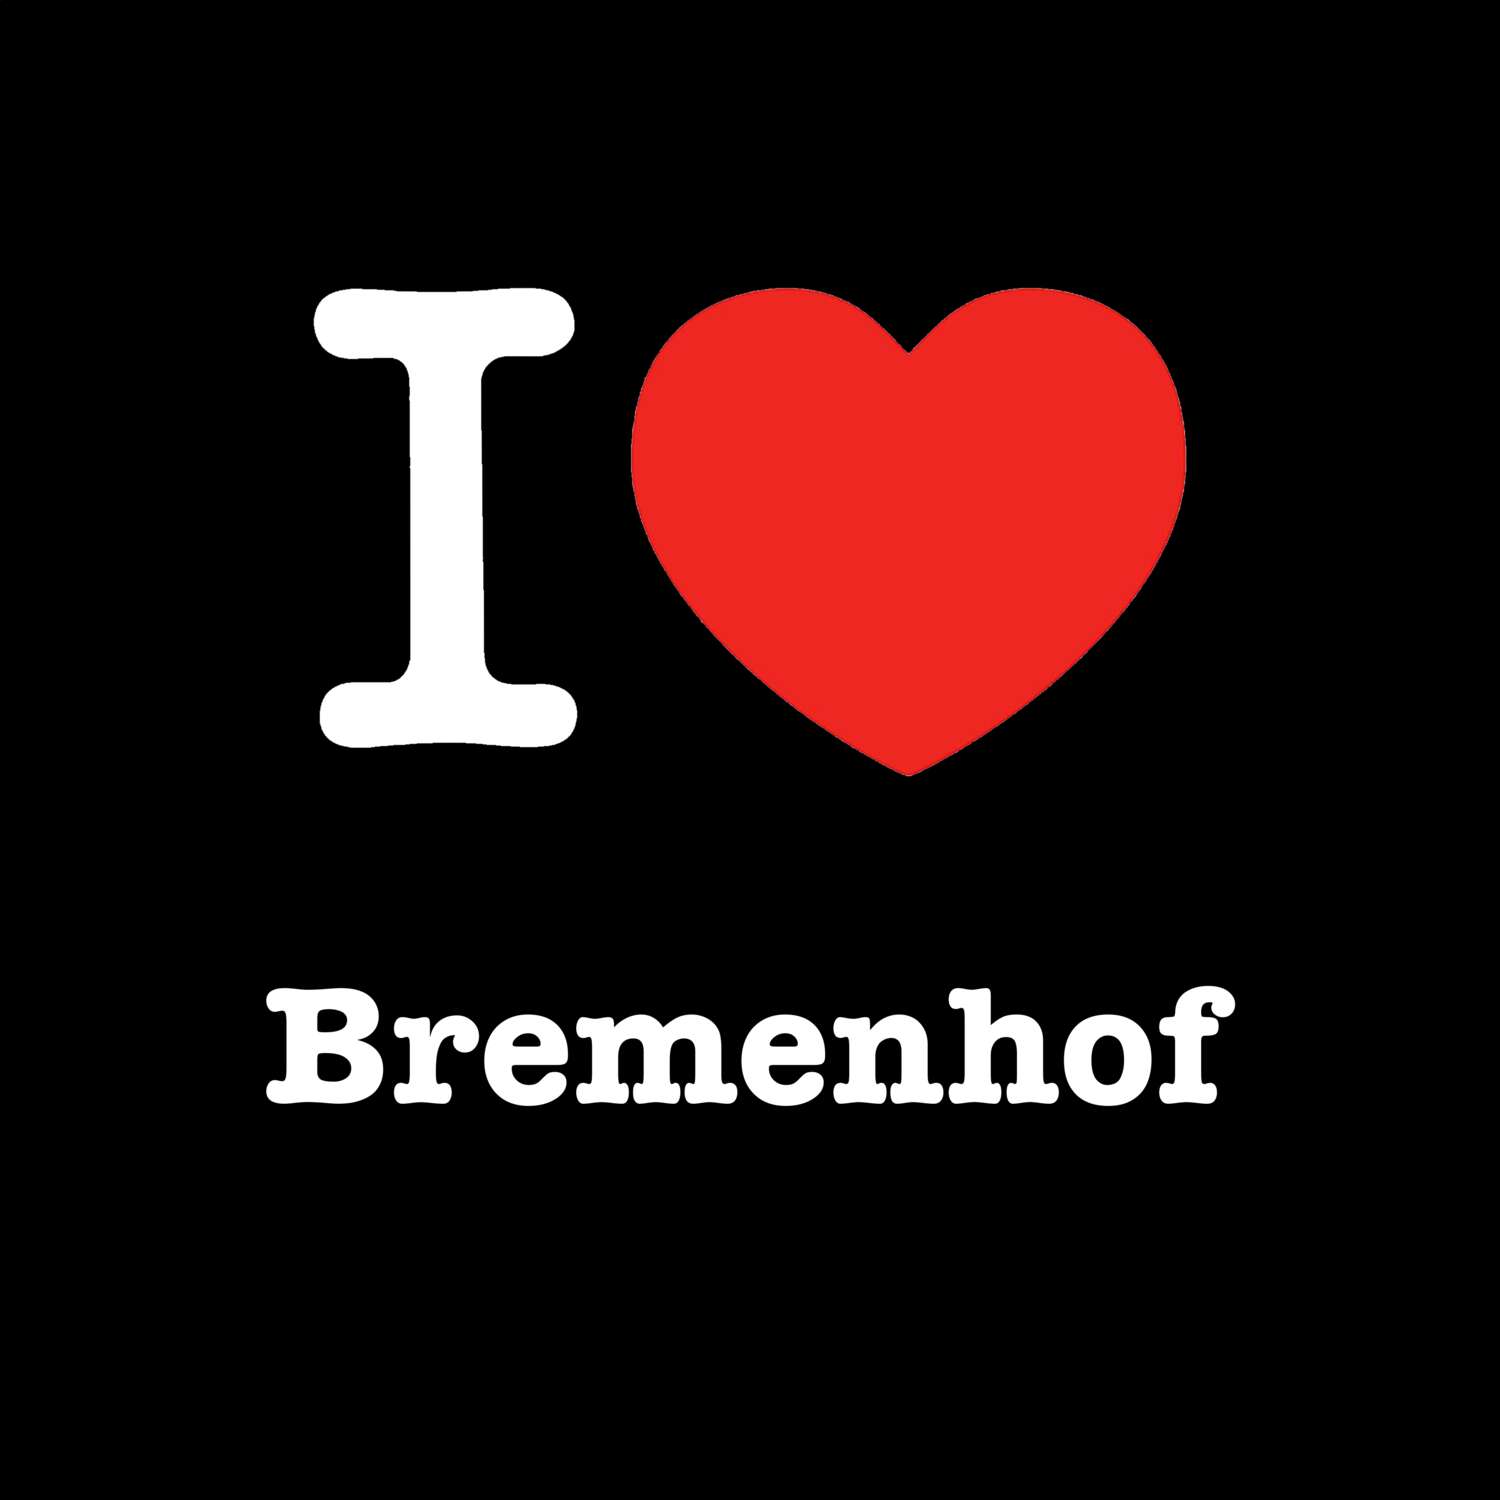 Bremenhof T-Shirt »I love«